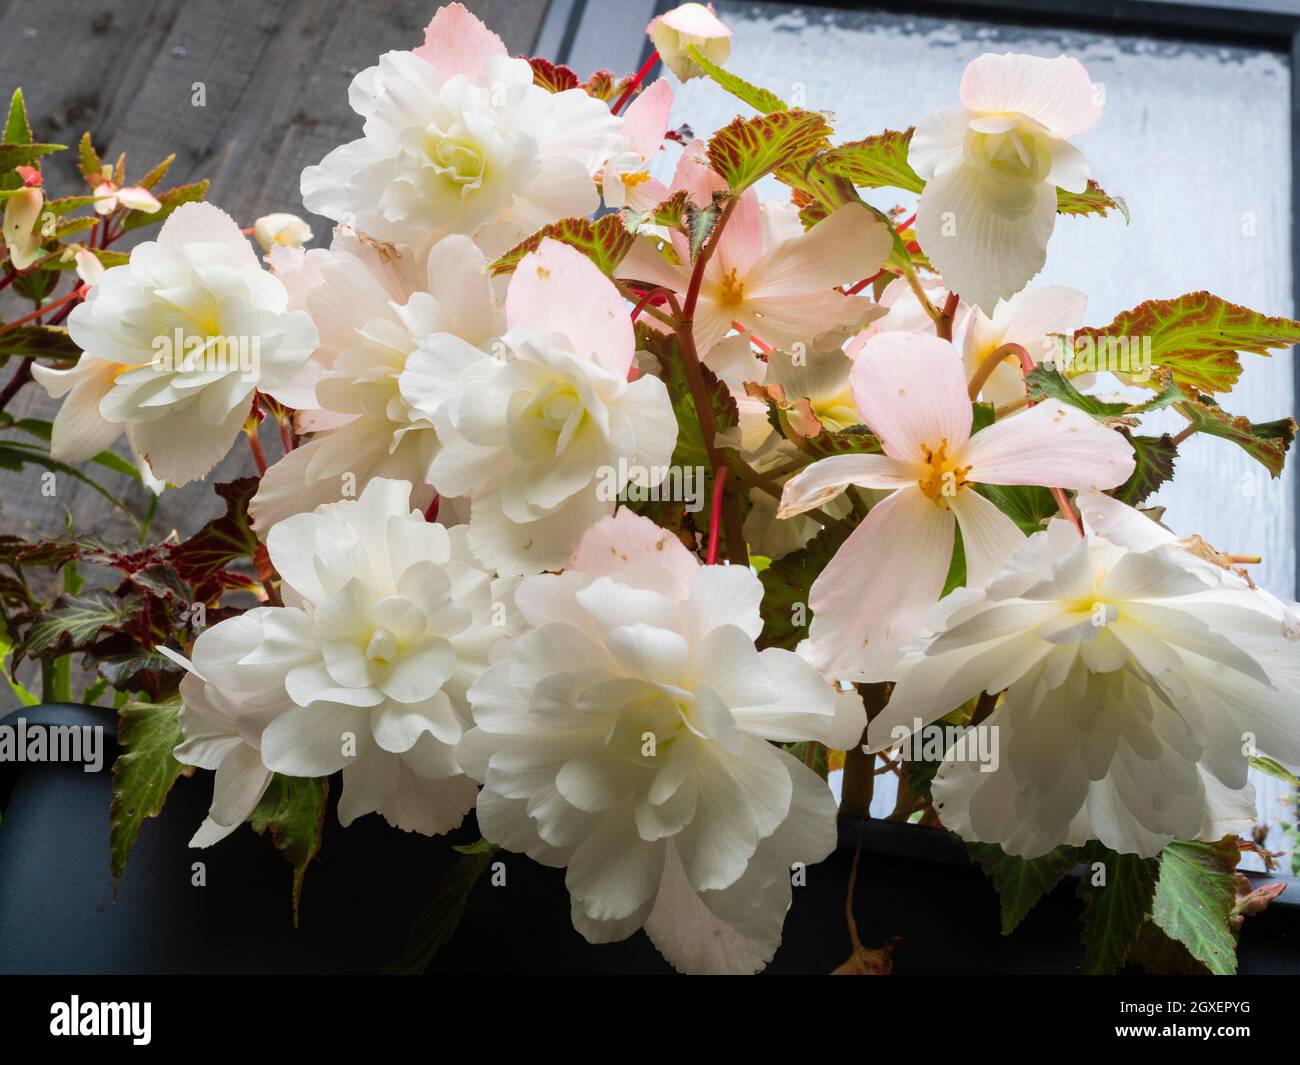 White double flowers of the tender, cascading hanging basket summer bloomer, Begonia 'Illumination White' (Illumination Series) Stock Photo